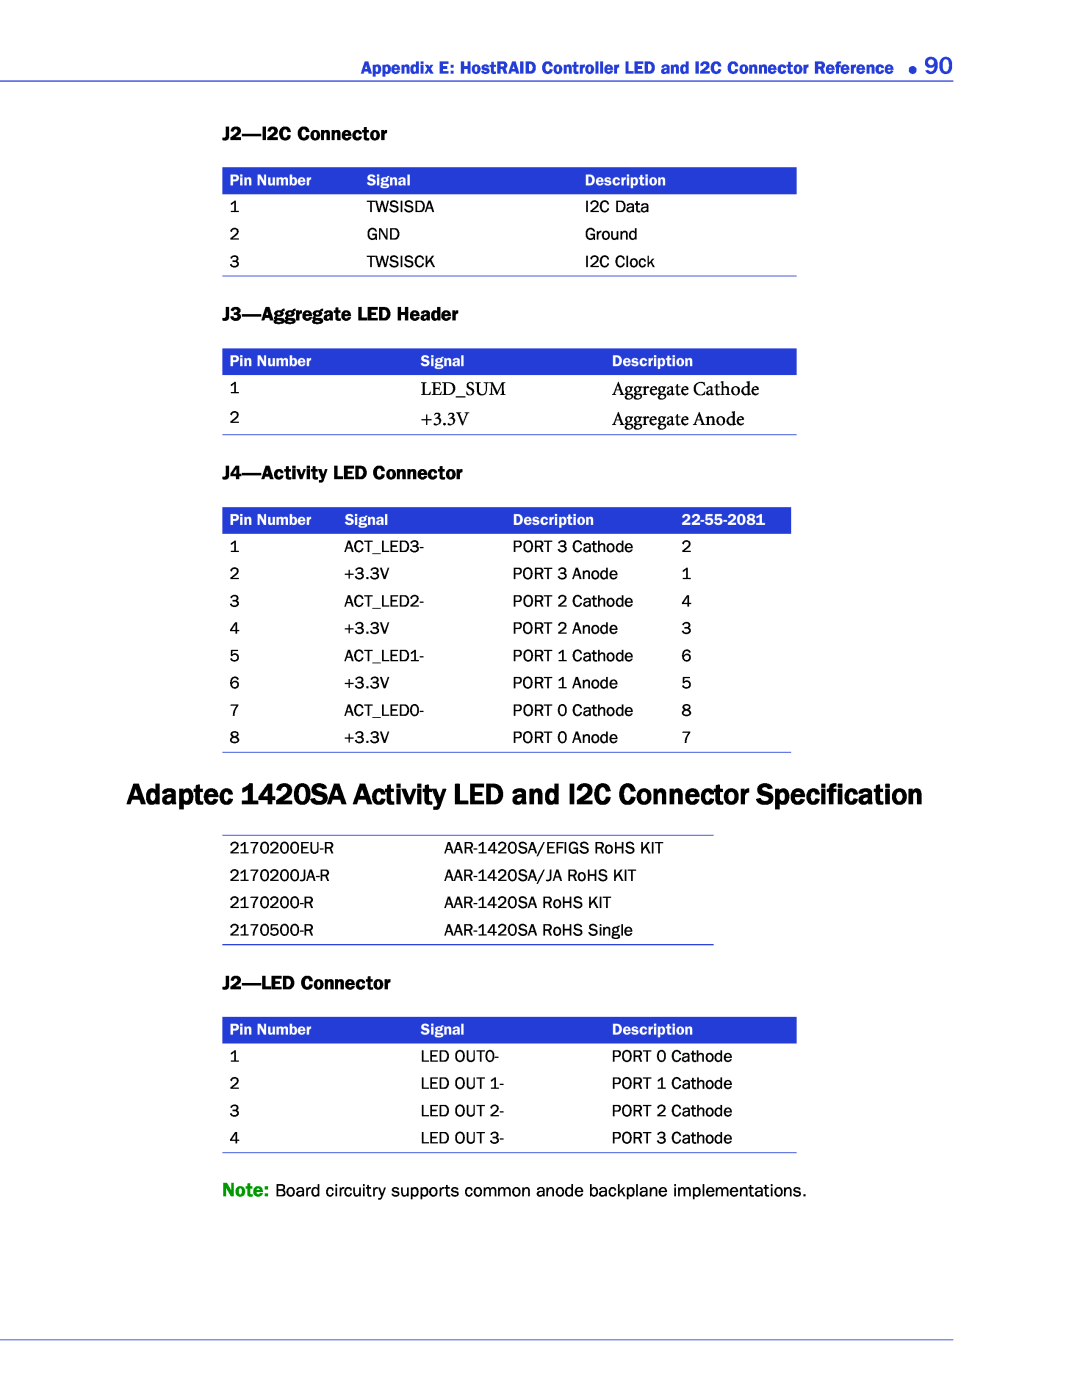 Adaptec 1225SA Adaptec 1420SA Activity LED and I2C Connector Specification, J2-I2C Connector, J3-Aggregate LED Header 